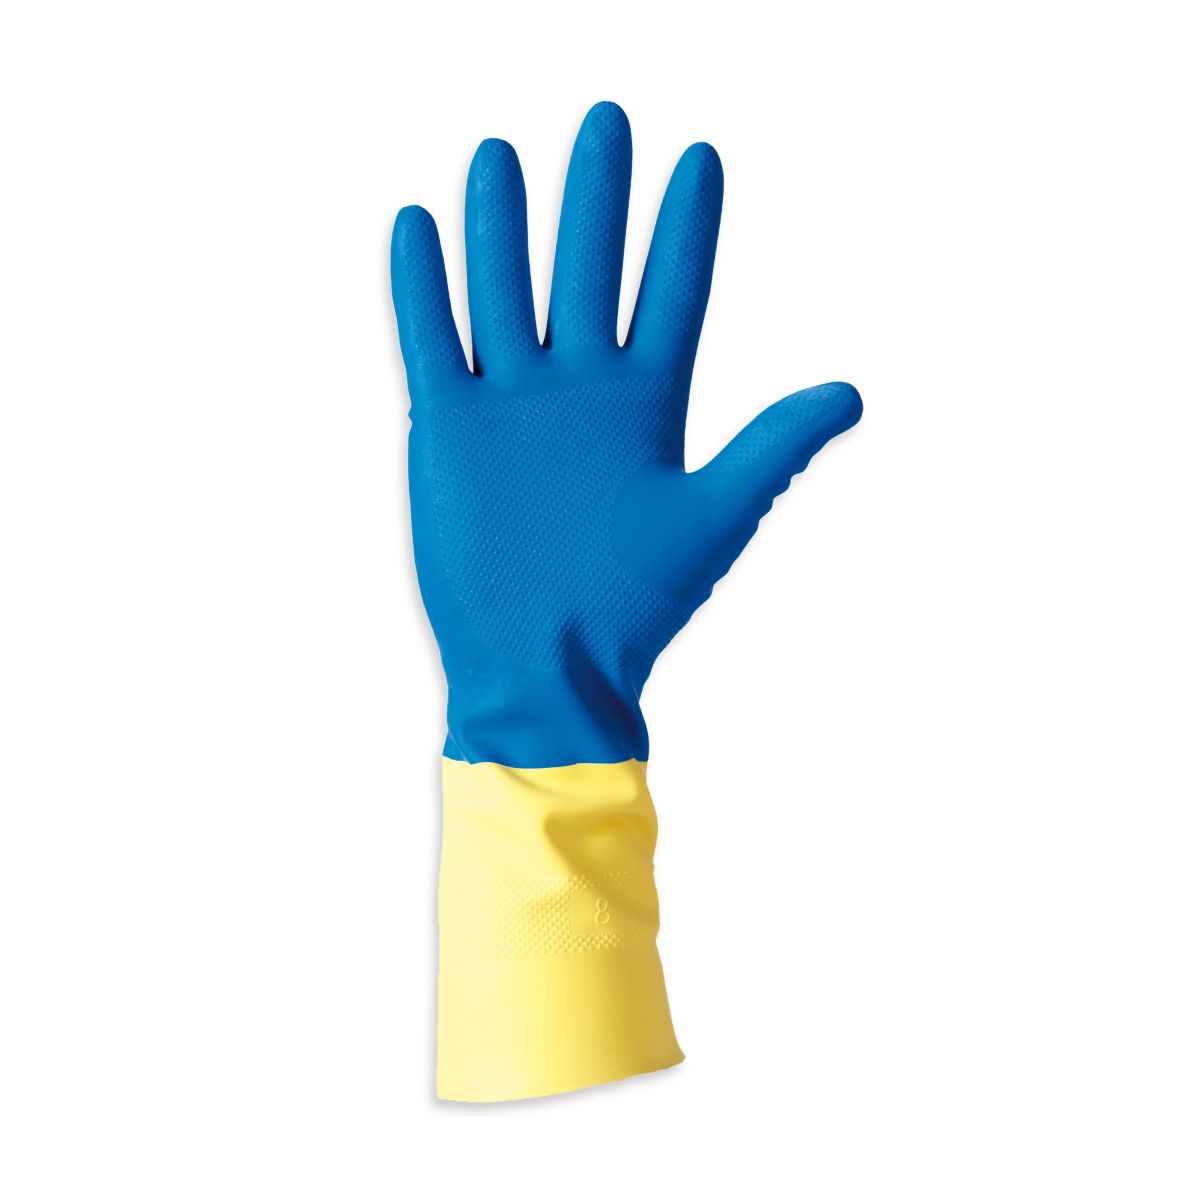 glovely-biprene-guanti-industriali-in-lattice-giallo-e-blu-1